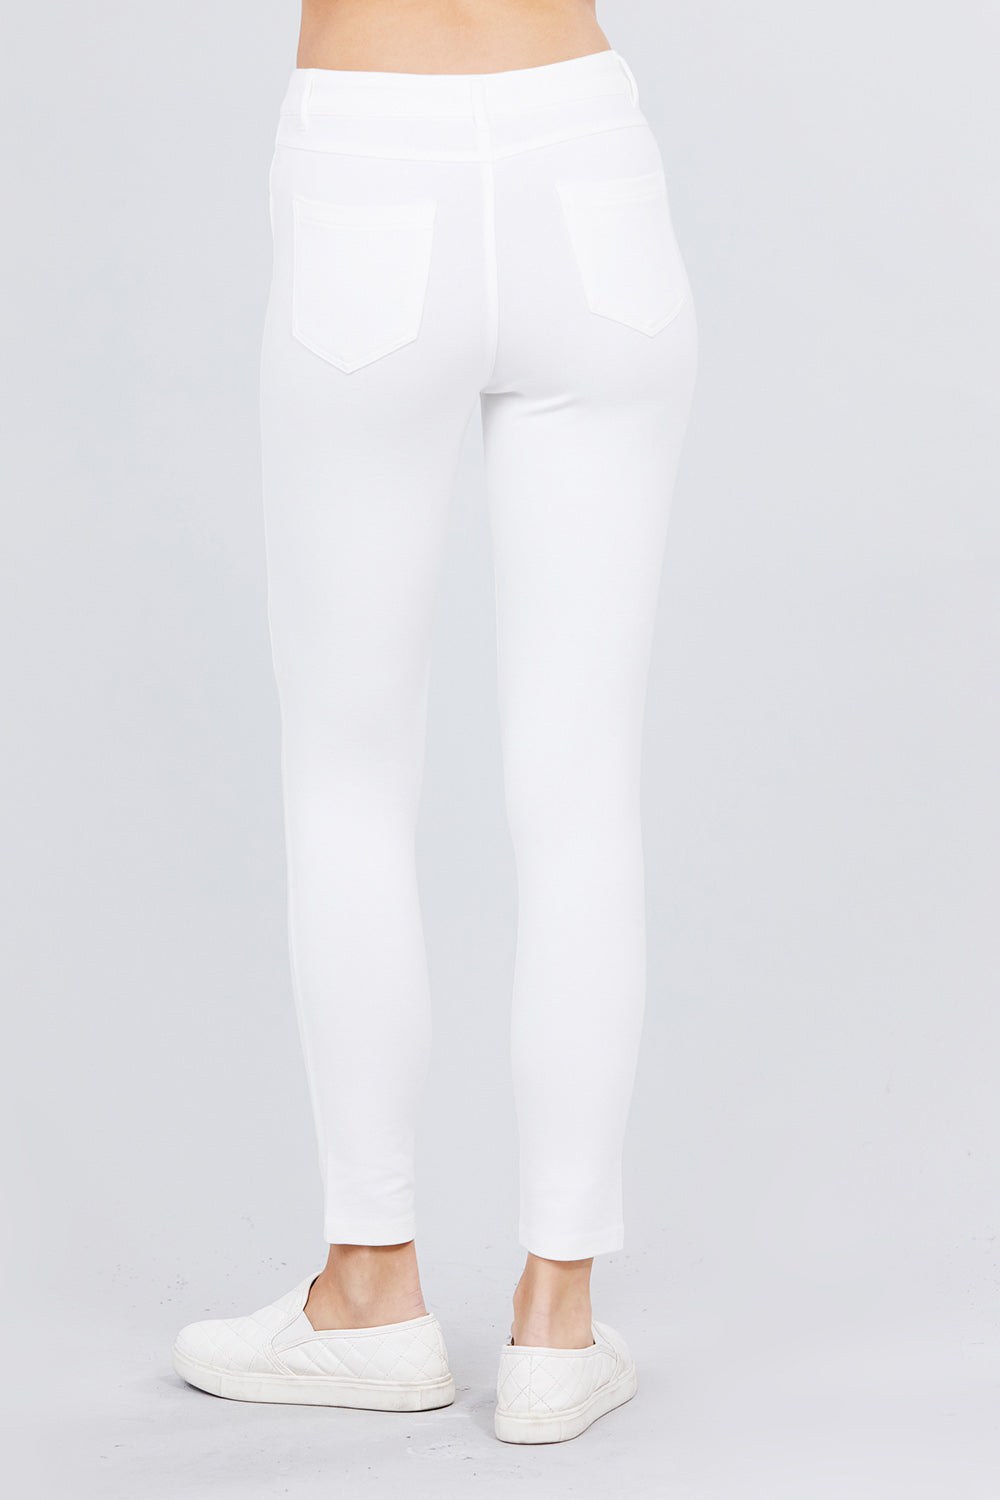 Khanomak 5 Pocket Shape Basic Solid Slim Fit Stretchy Skinny Long Thick Jegging Pants